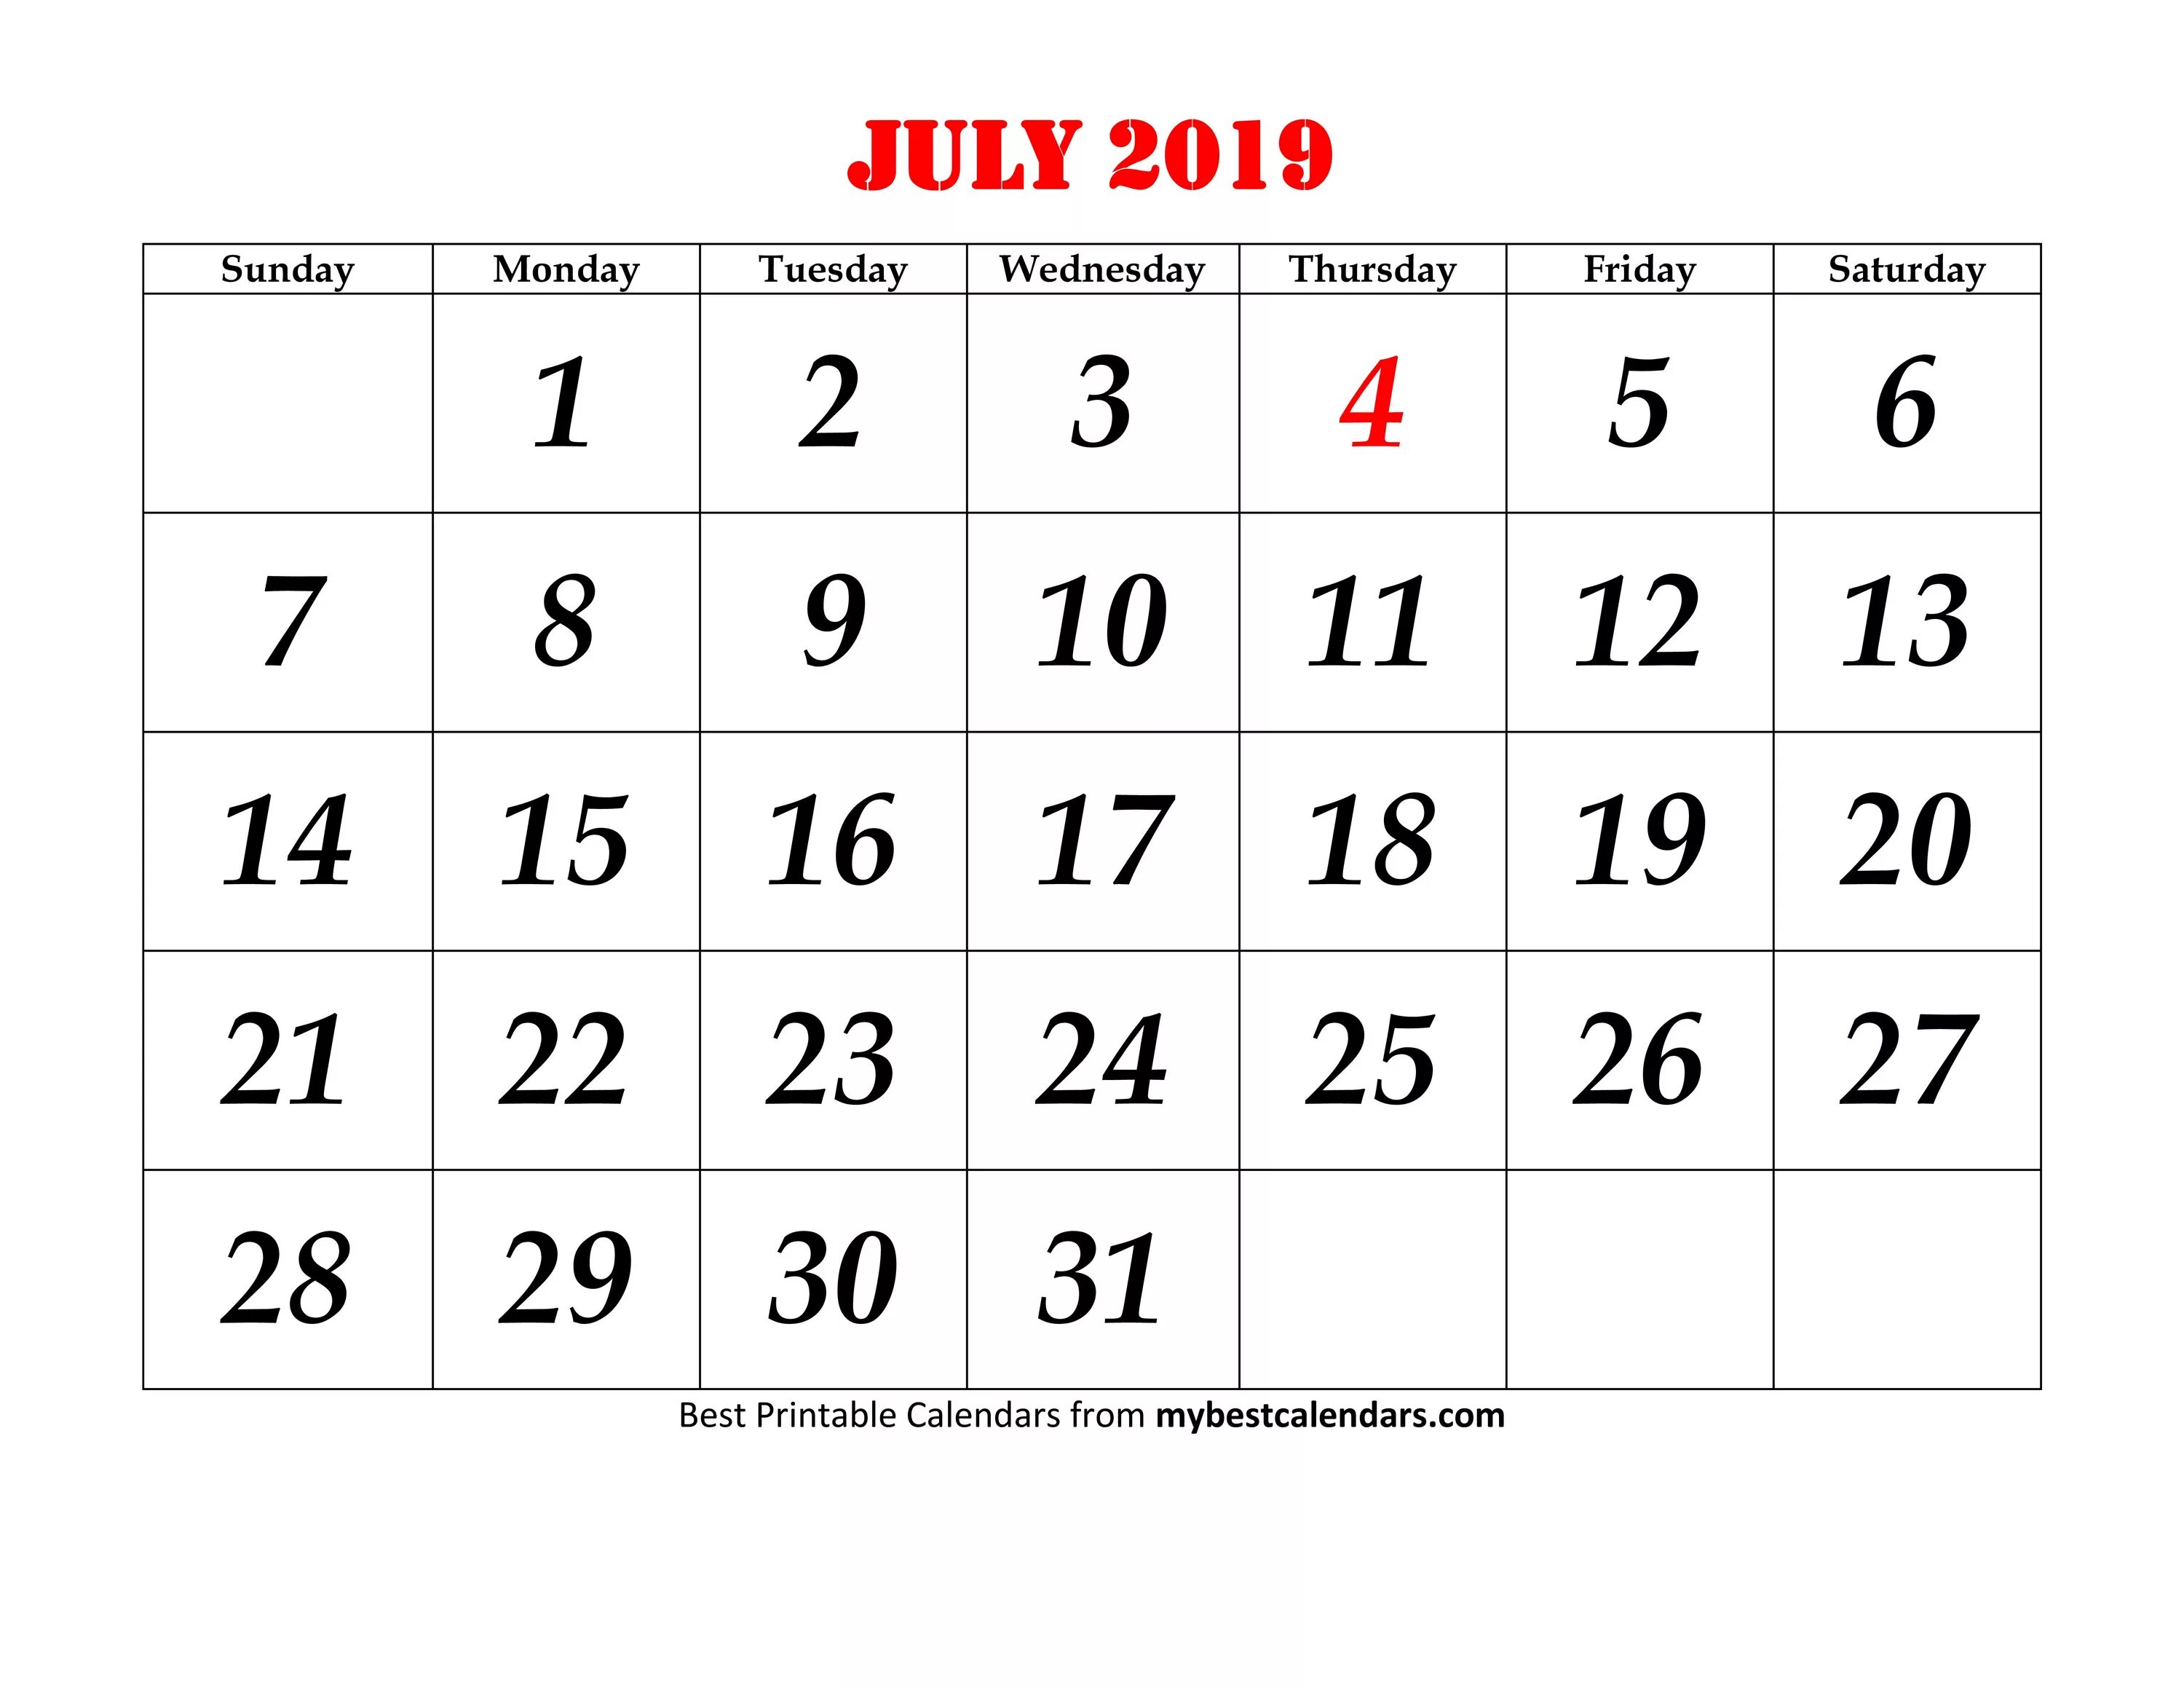 Календарь июль. July Calendar. Июль 2019 календарь. Июль 2019 года календарь. Календарь на июль месяц